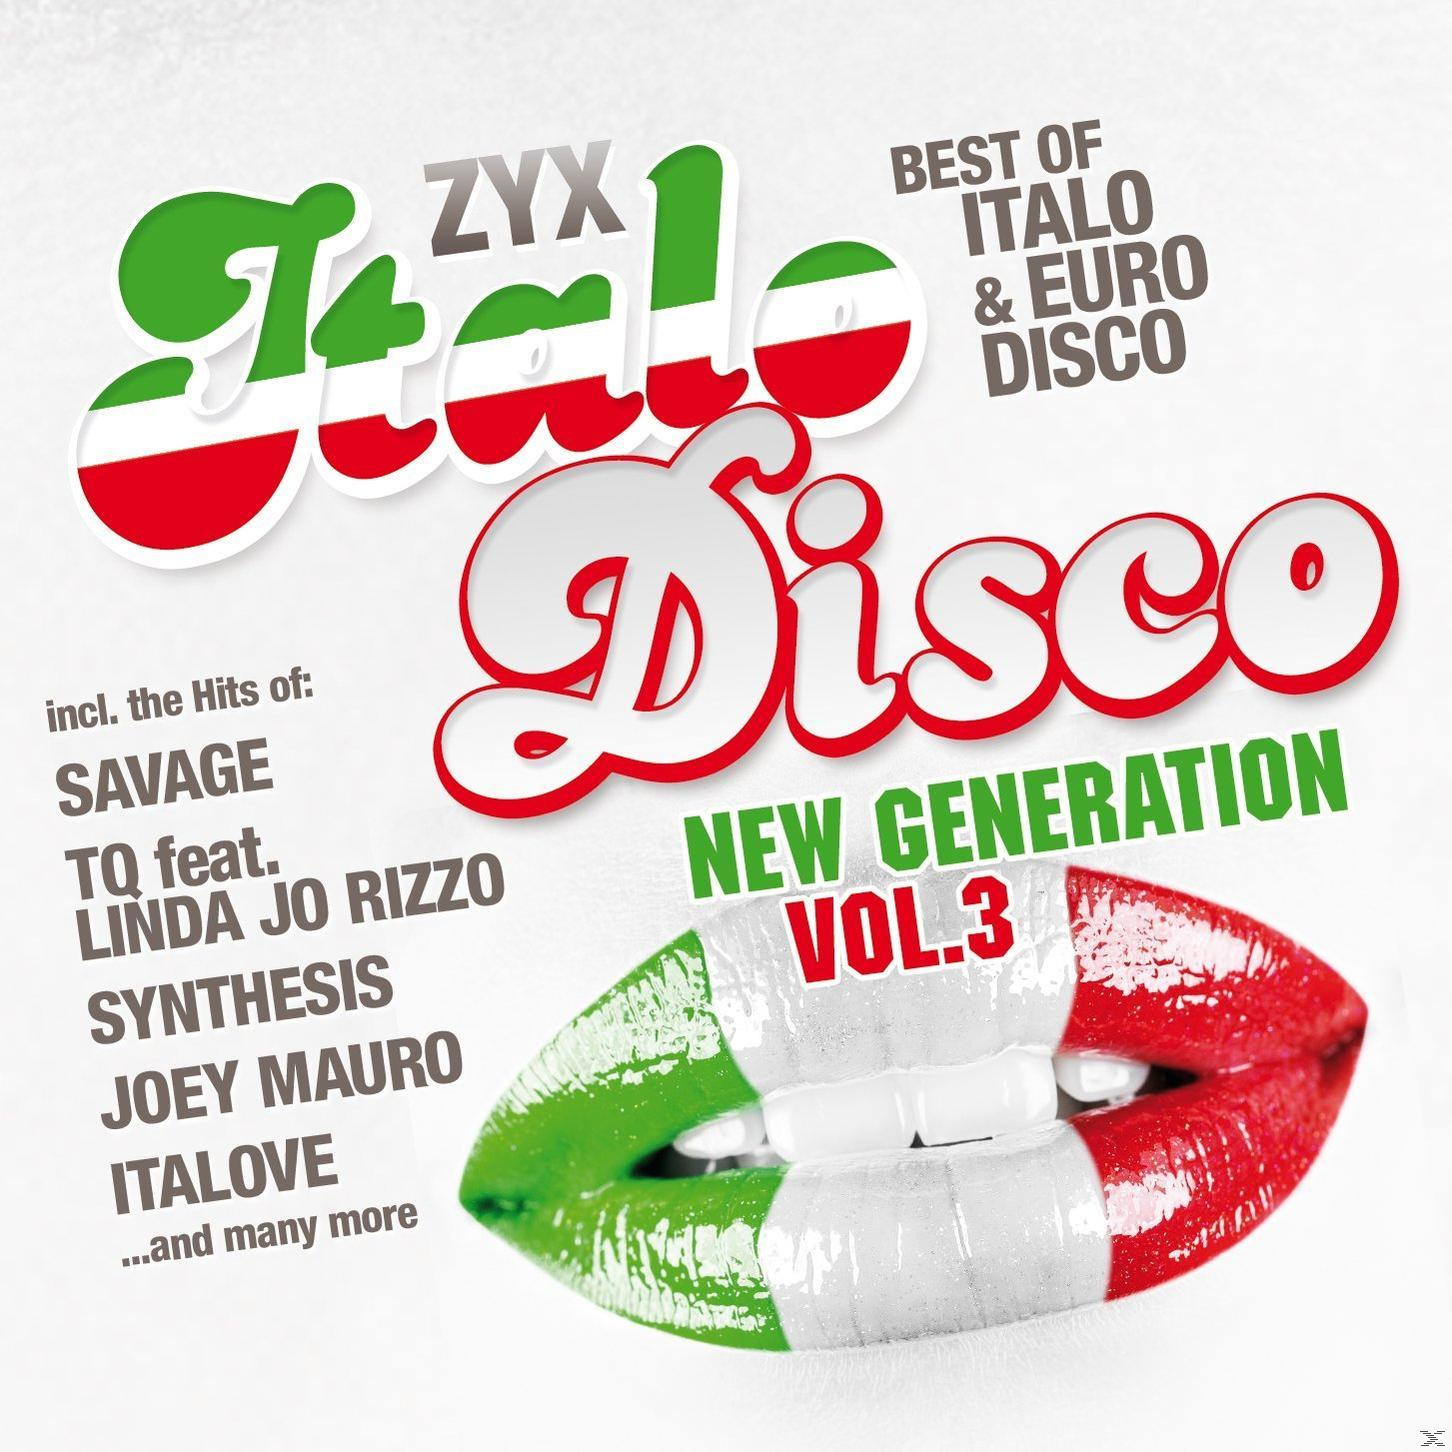 Zyx - Generation New - (CD) Disco VARIOUS Vol.3 Italo